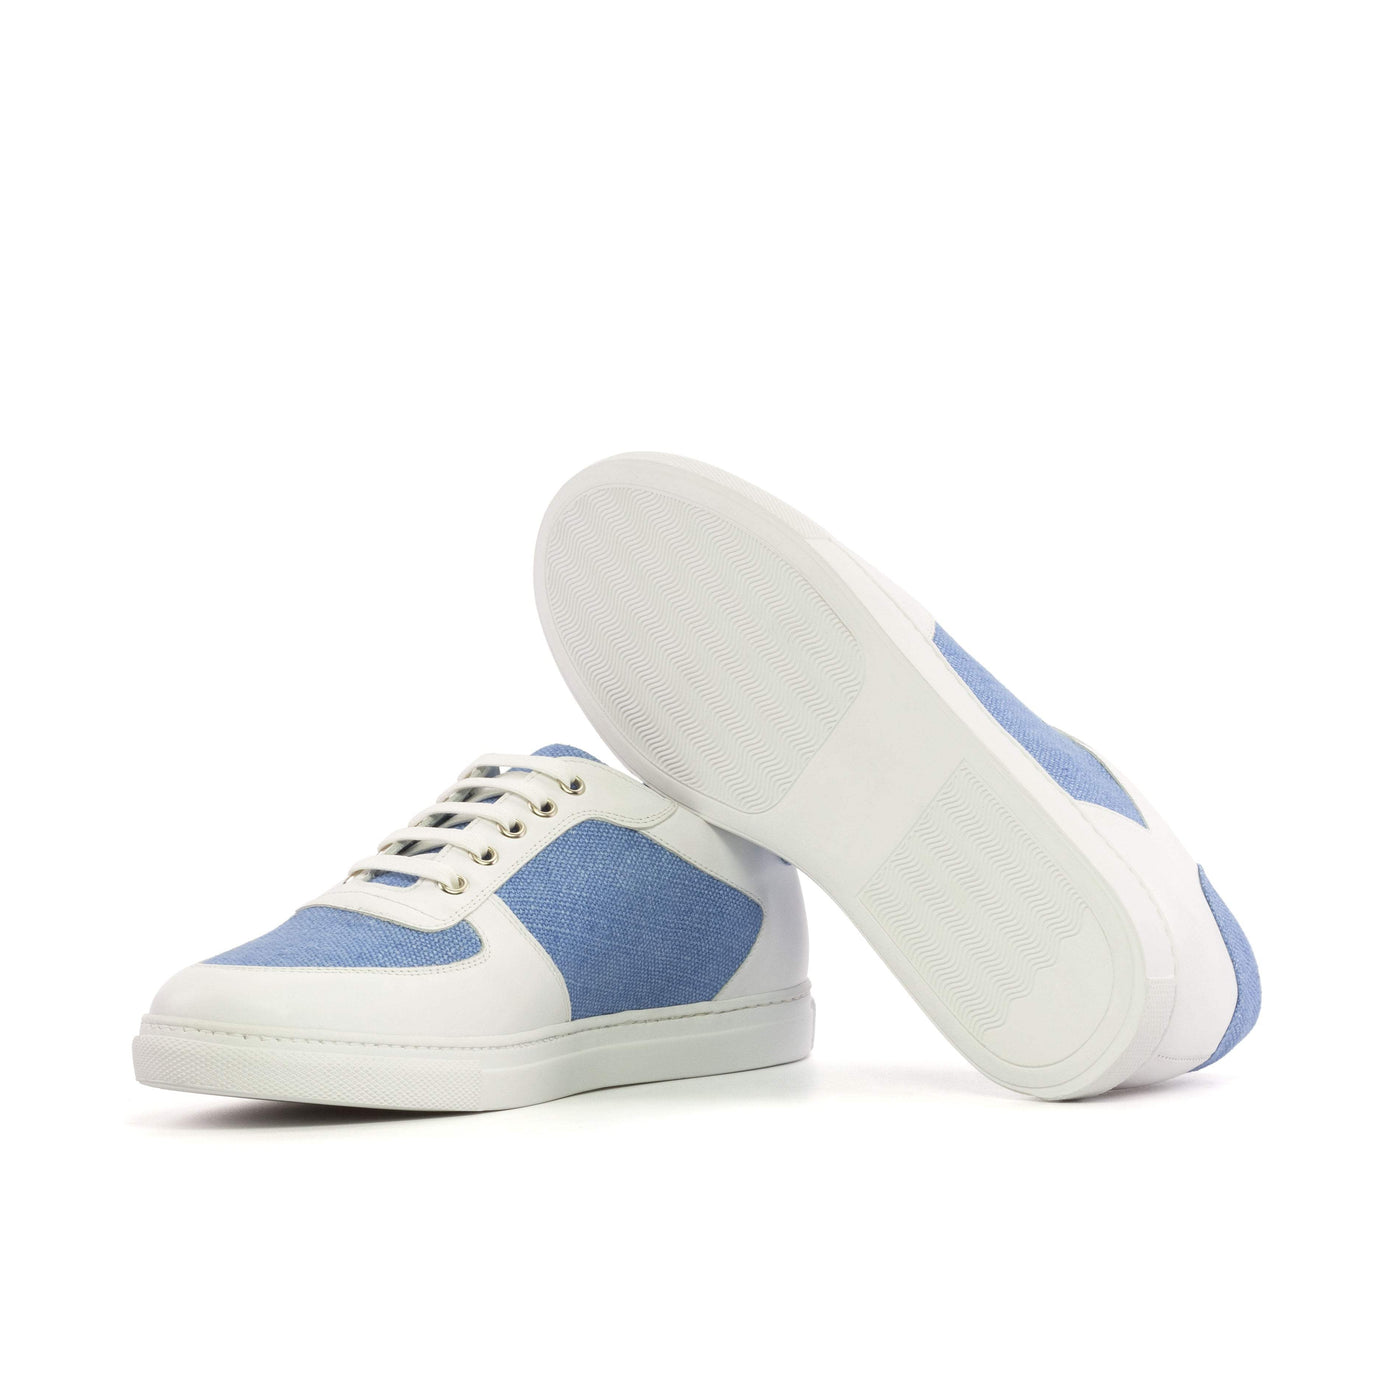 Men's Low Top Trainer Shoes Blue 5621 2- MERRIMIUM